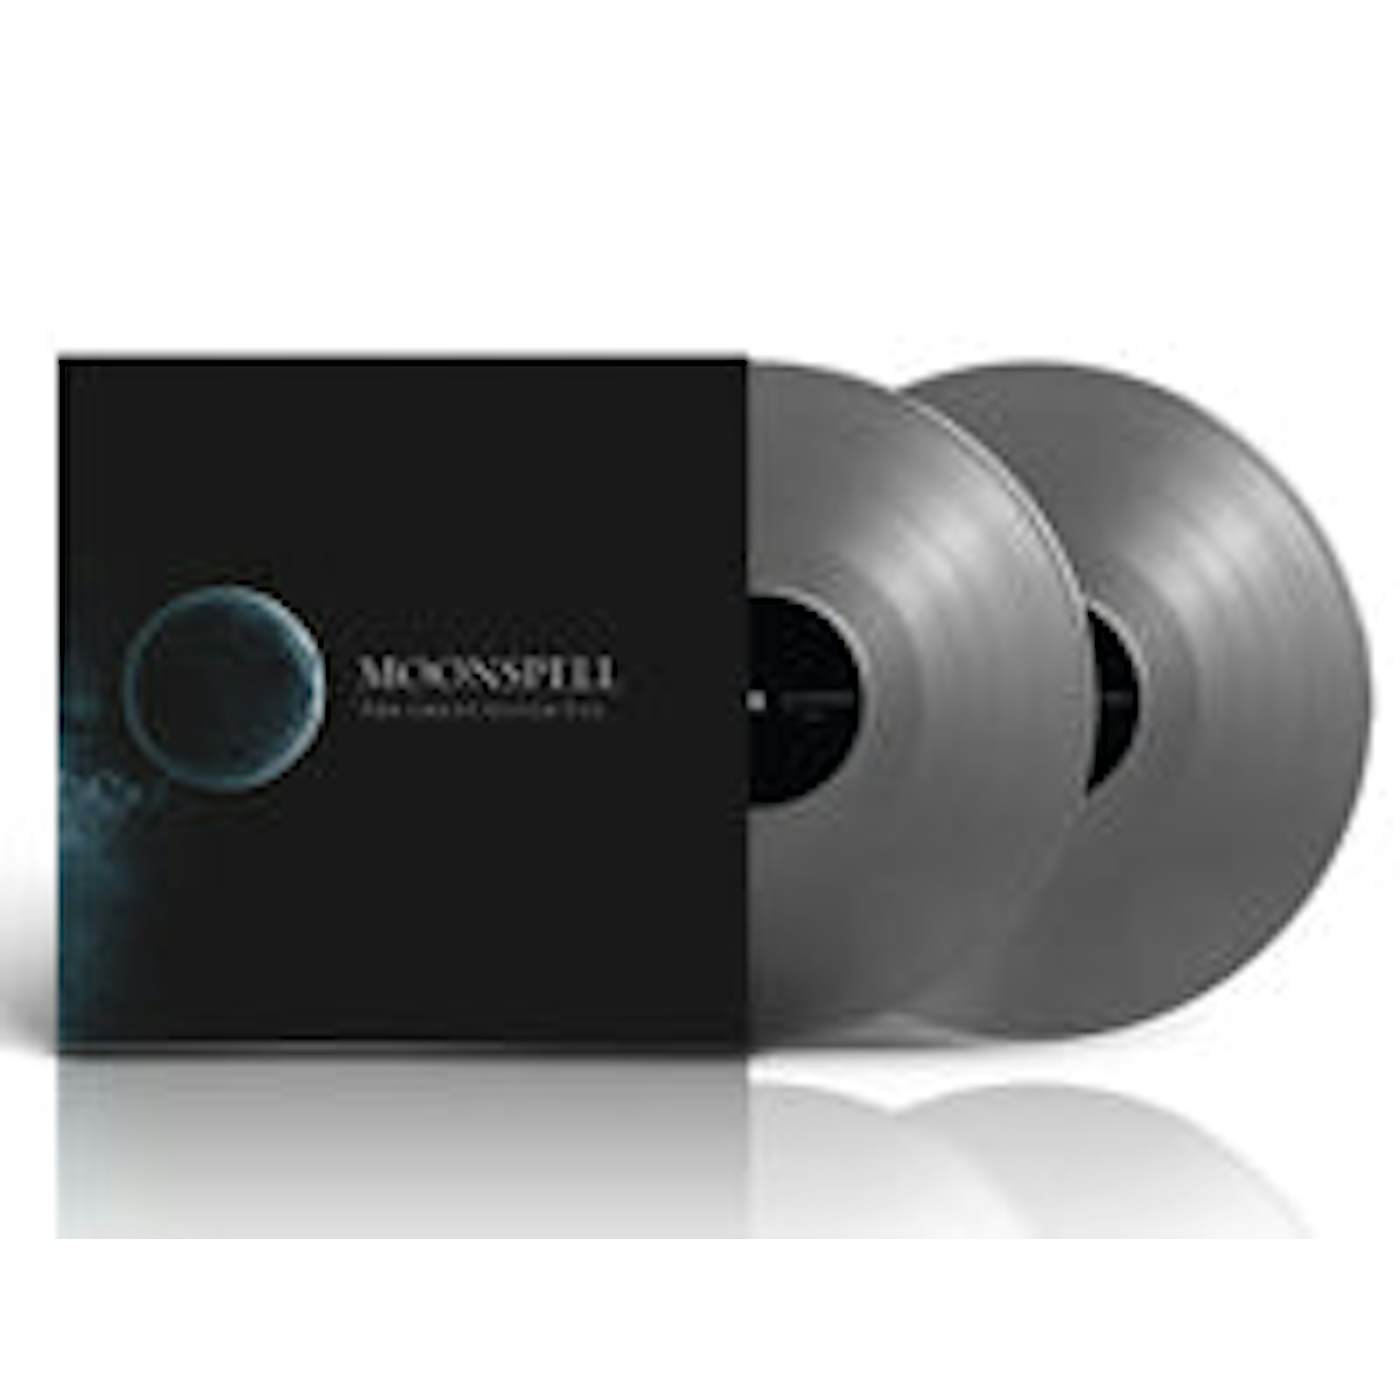 Moonspell LP - The Great Silver Eye (Grey Vinyl)